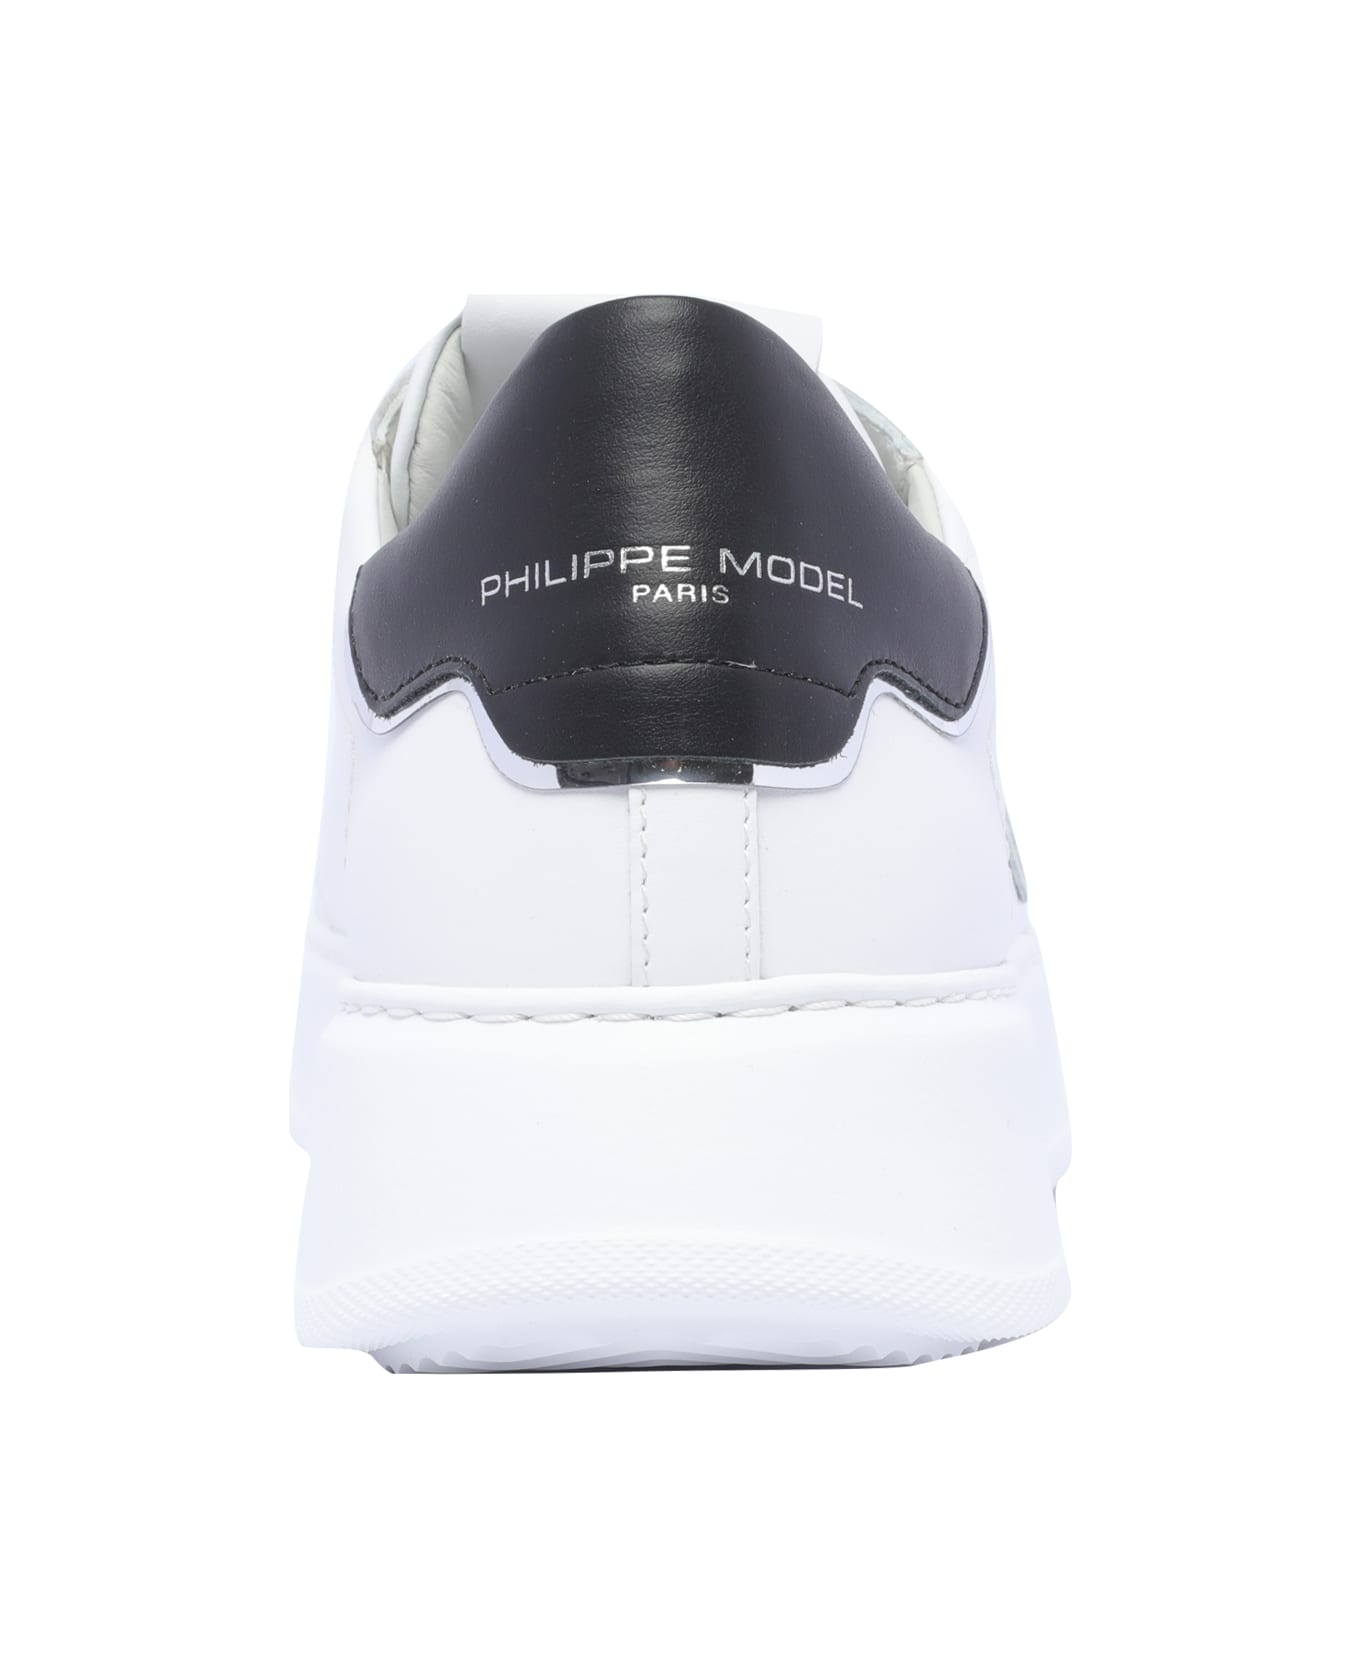 Philippe Model Temple Sneakers - White, black